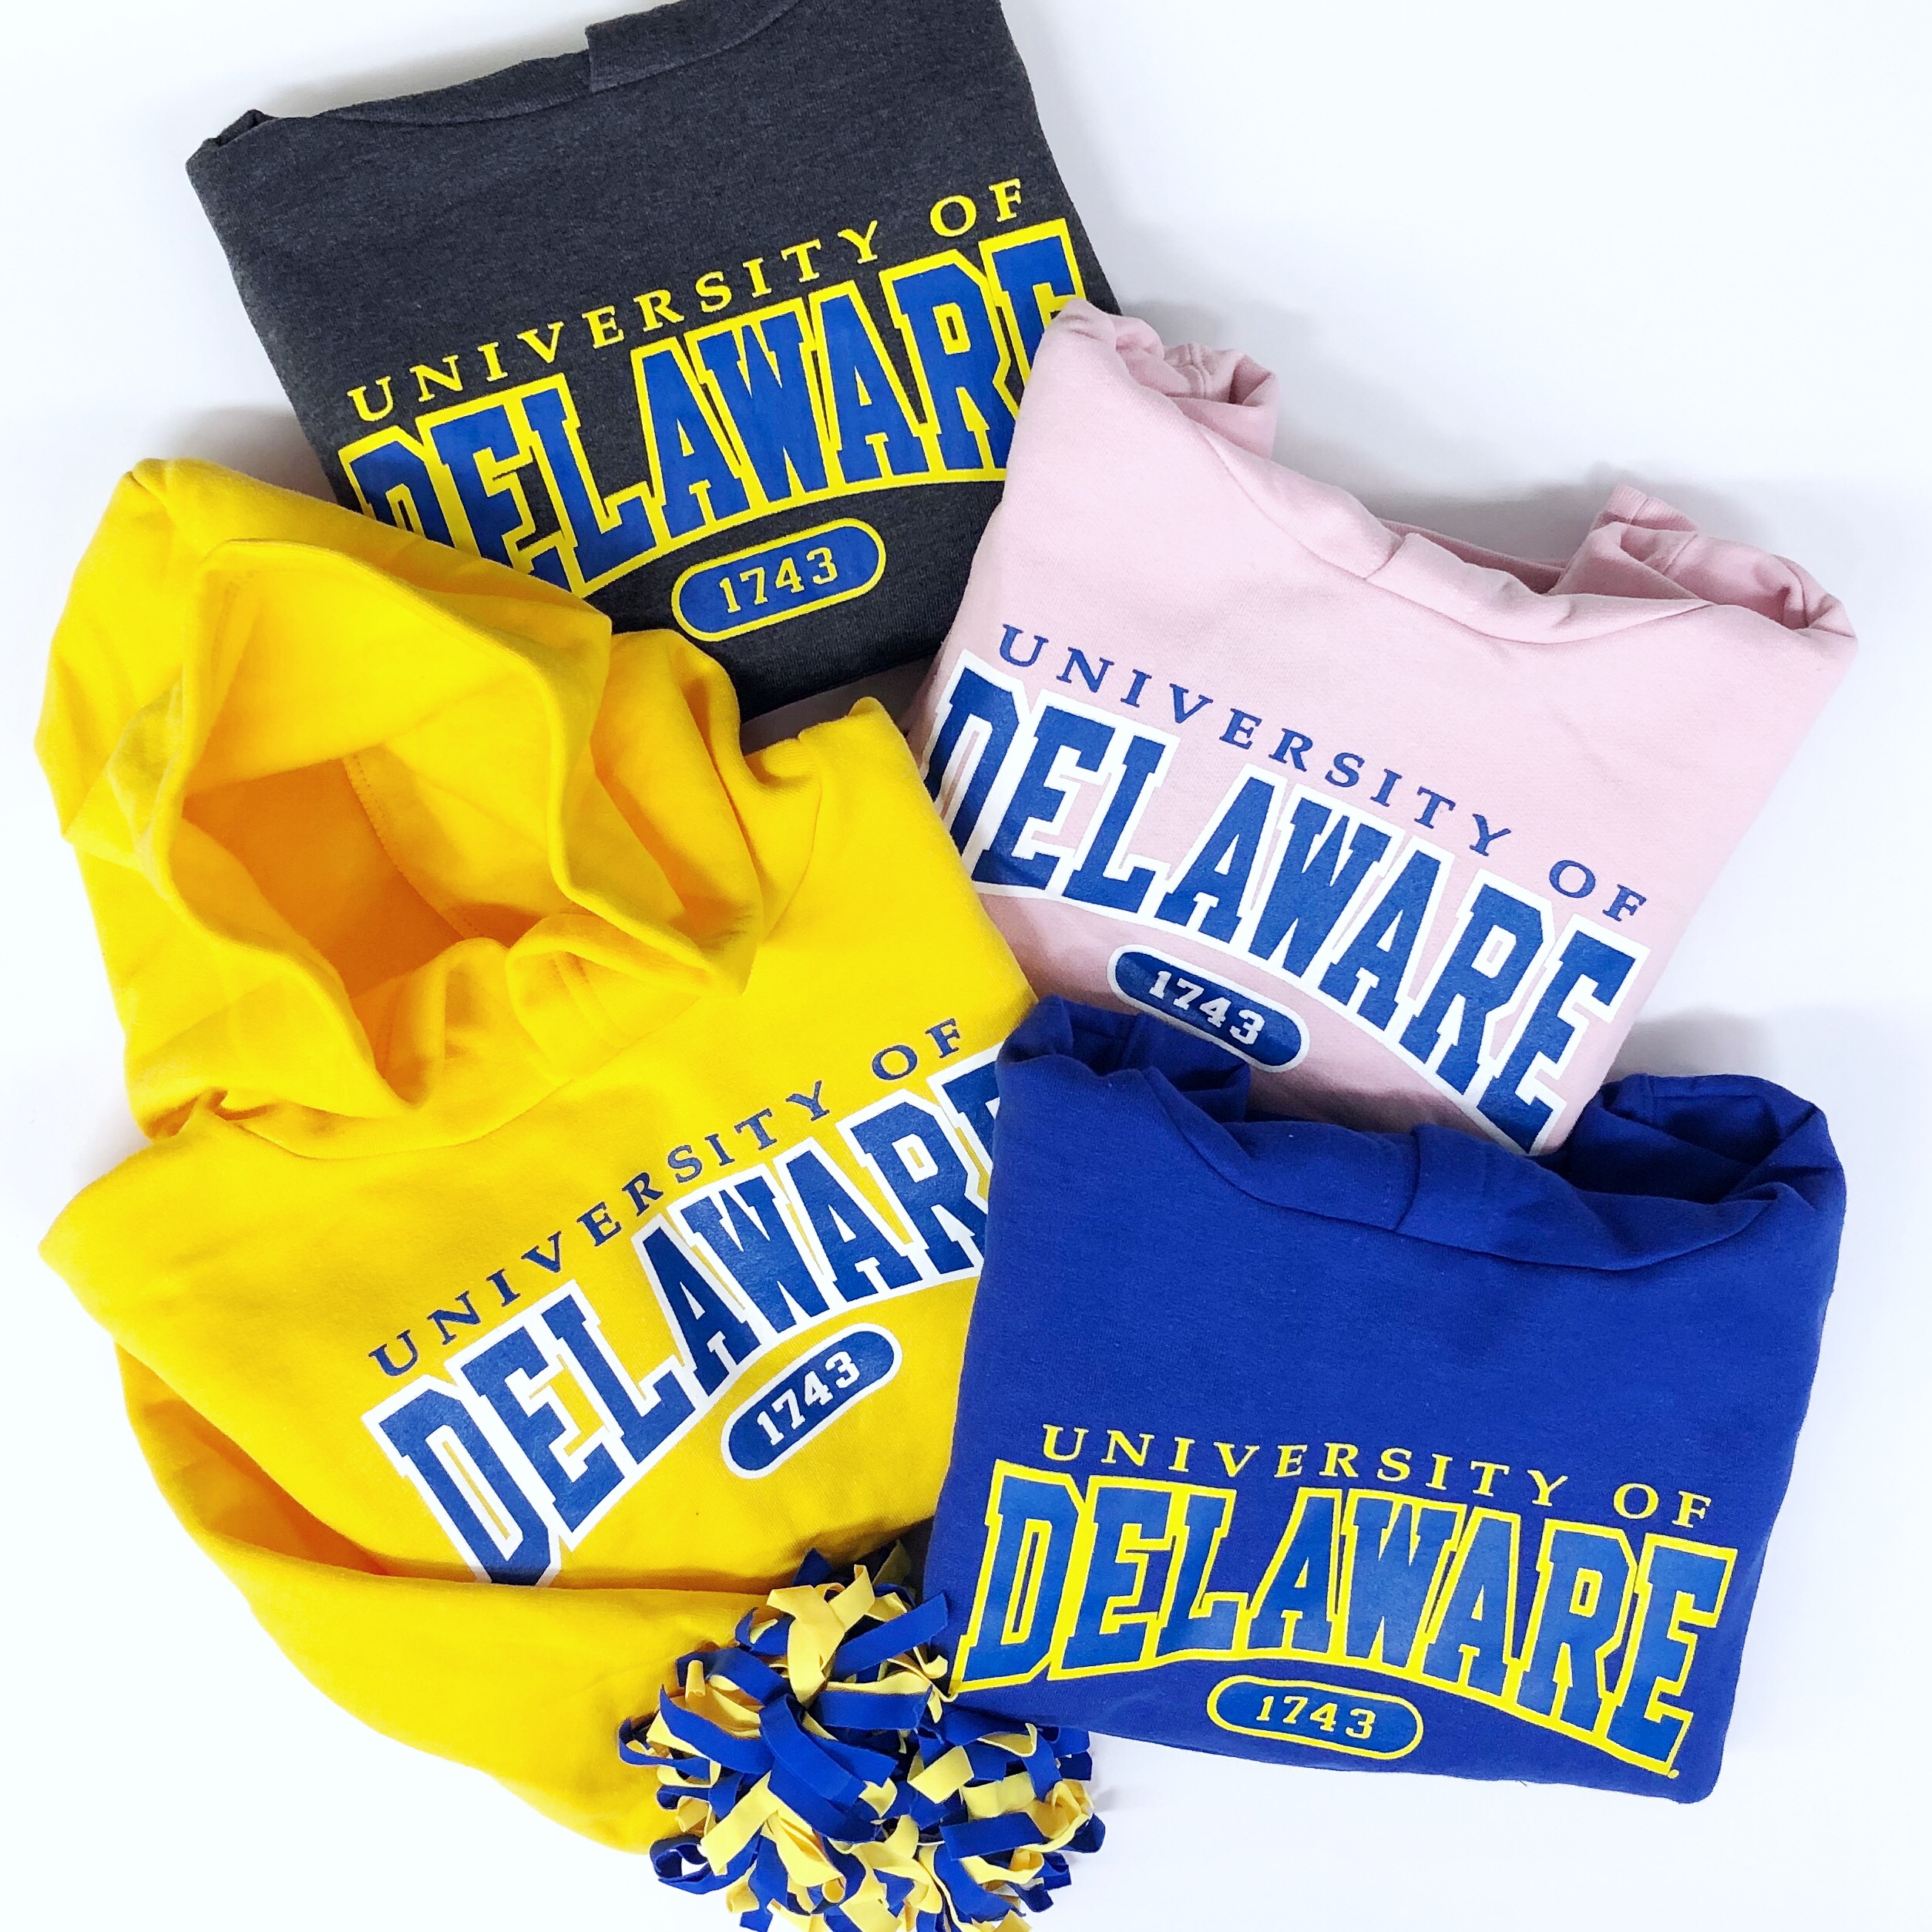 University of Delaware Champion Youth 1743 Hoodie Sweatshirt